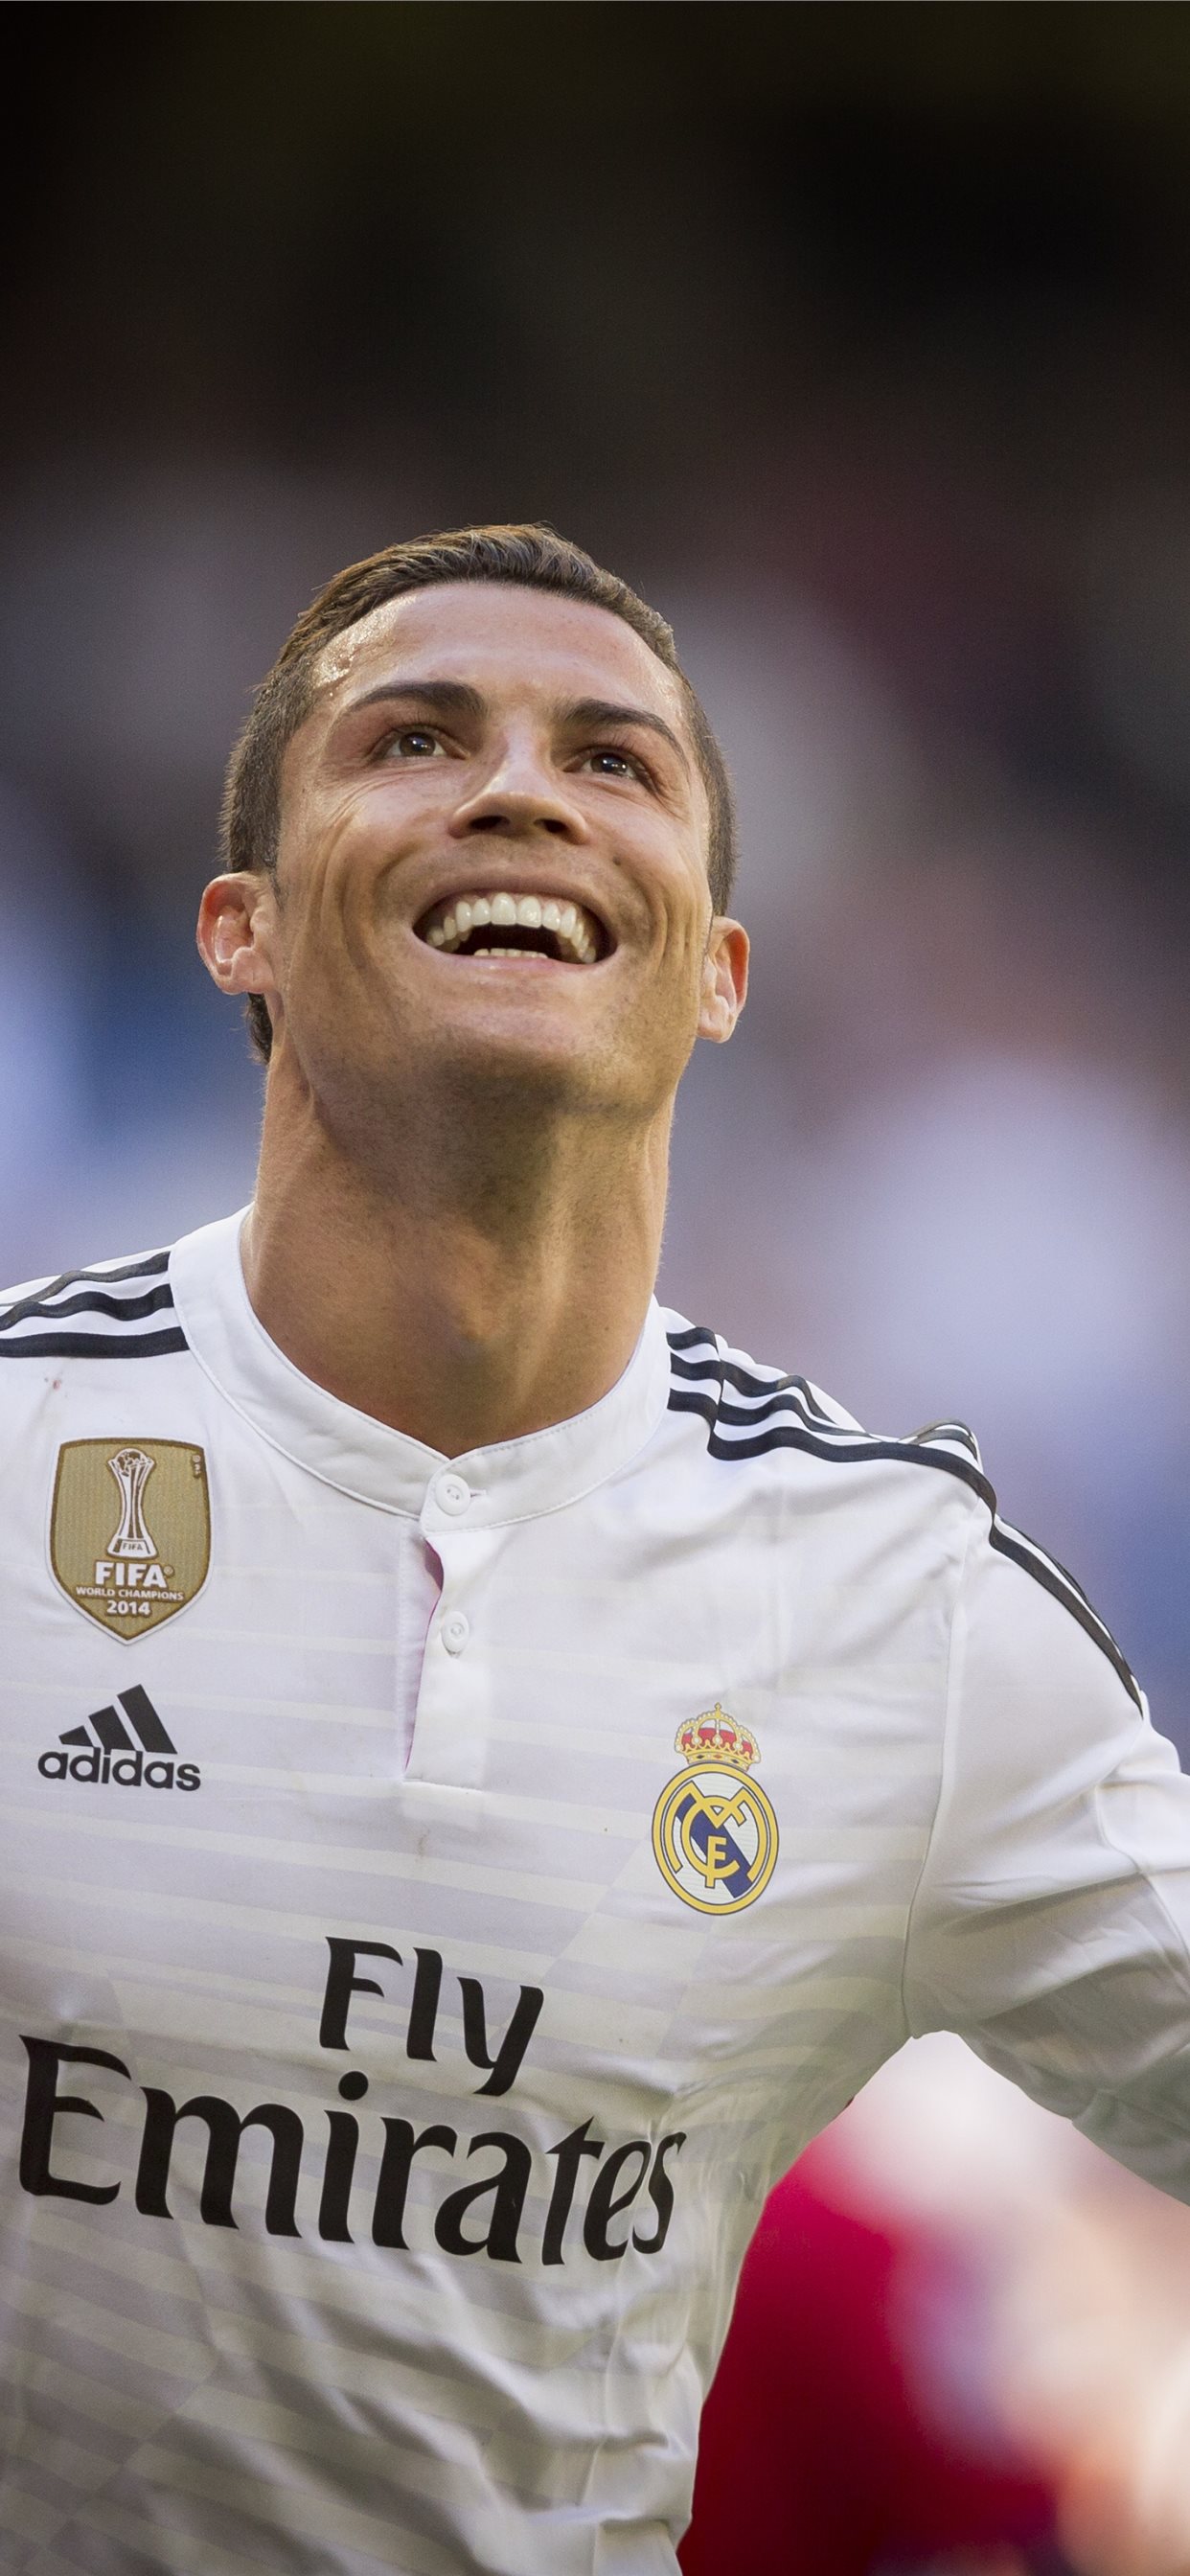 Cristiano Ronaldo Real Madrid Lockscreen Wallpaper by adi149 on DeviantArt